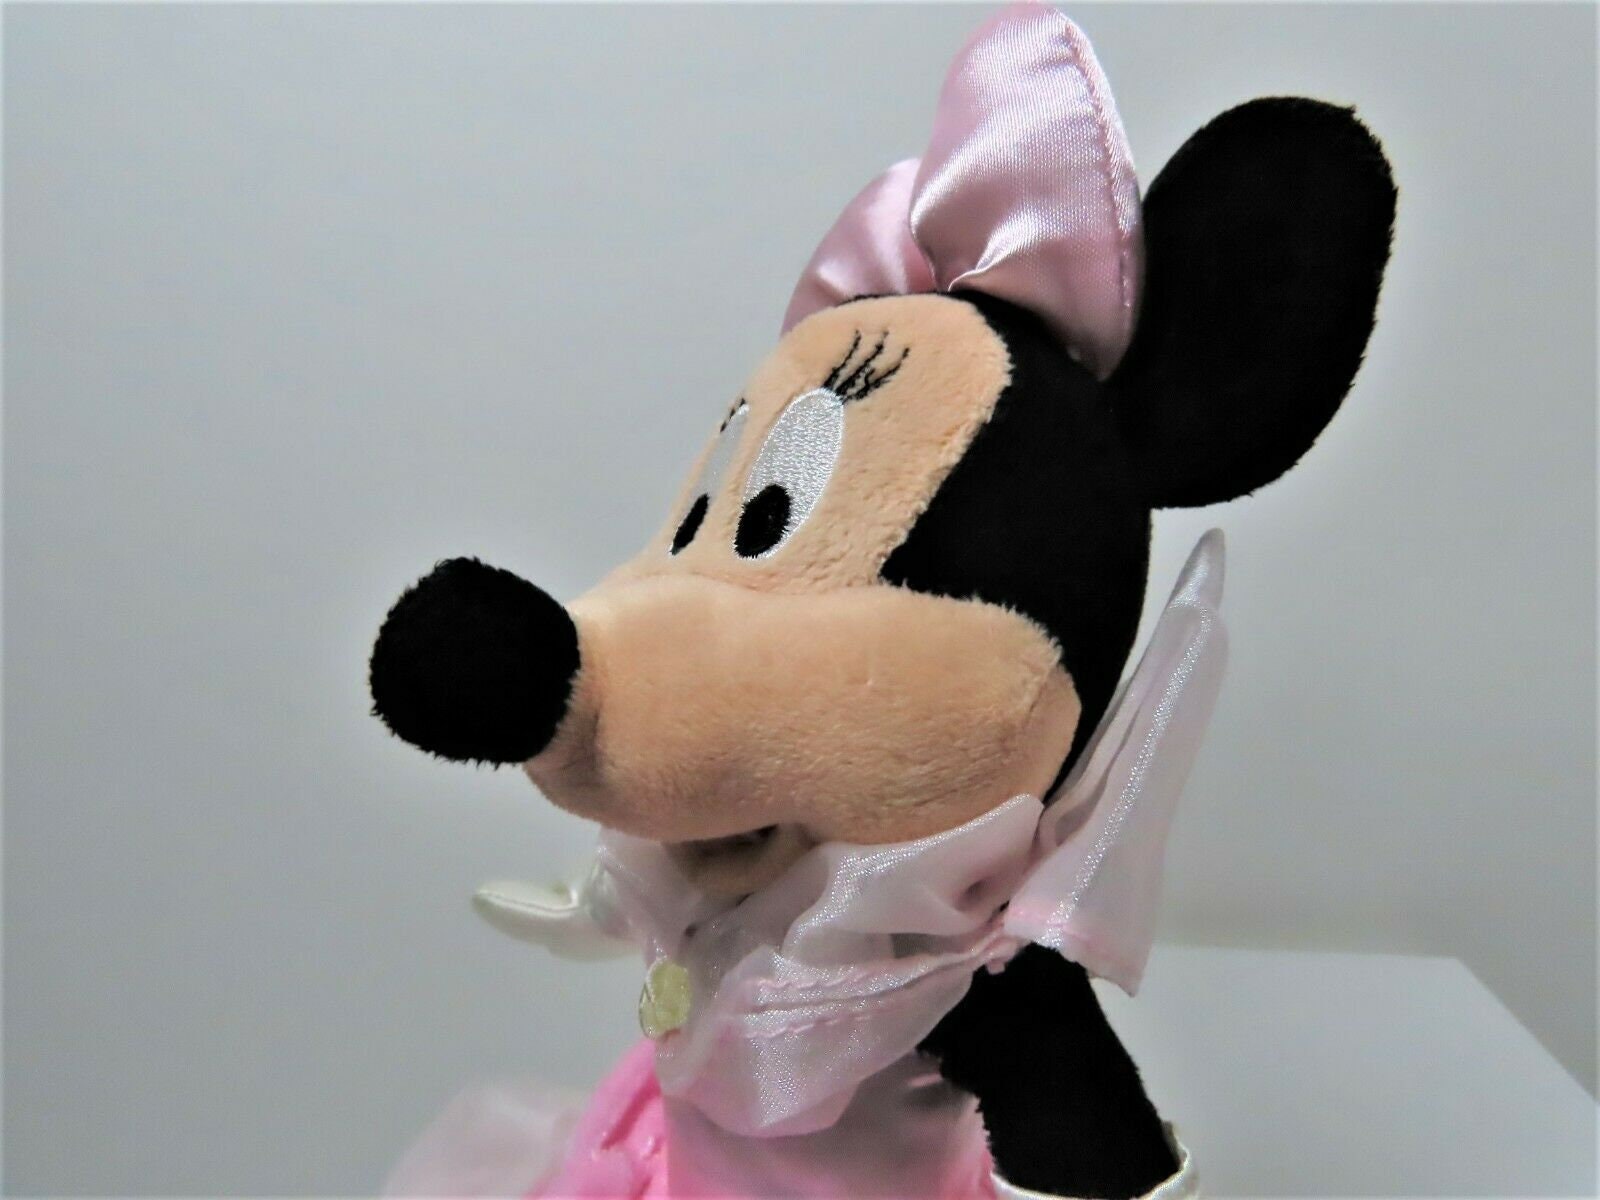 dwaas verlies Zullen Minnie Mouse prinses knuffel - Etsy Nederland